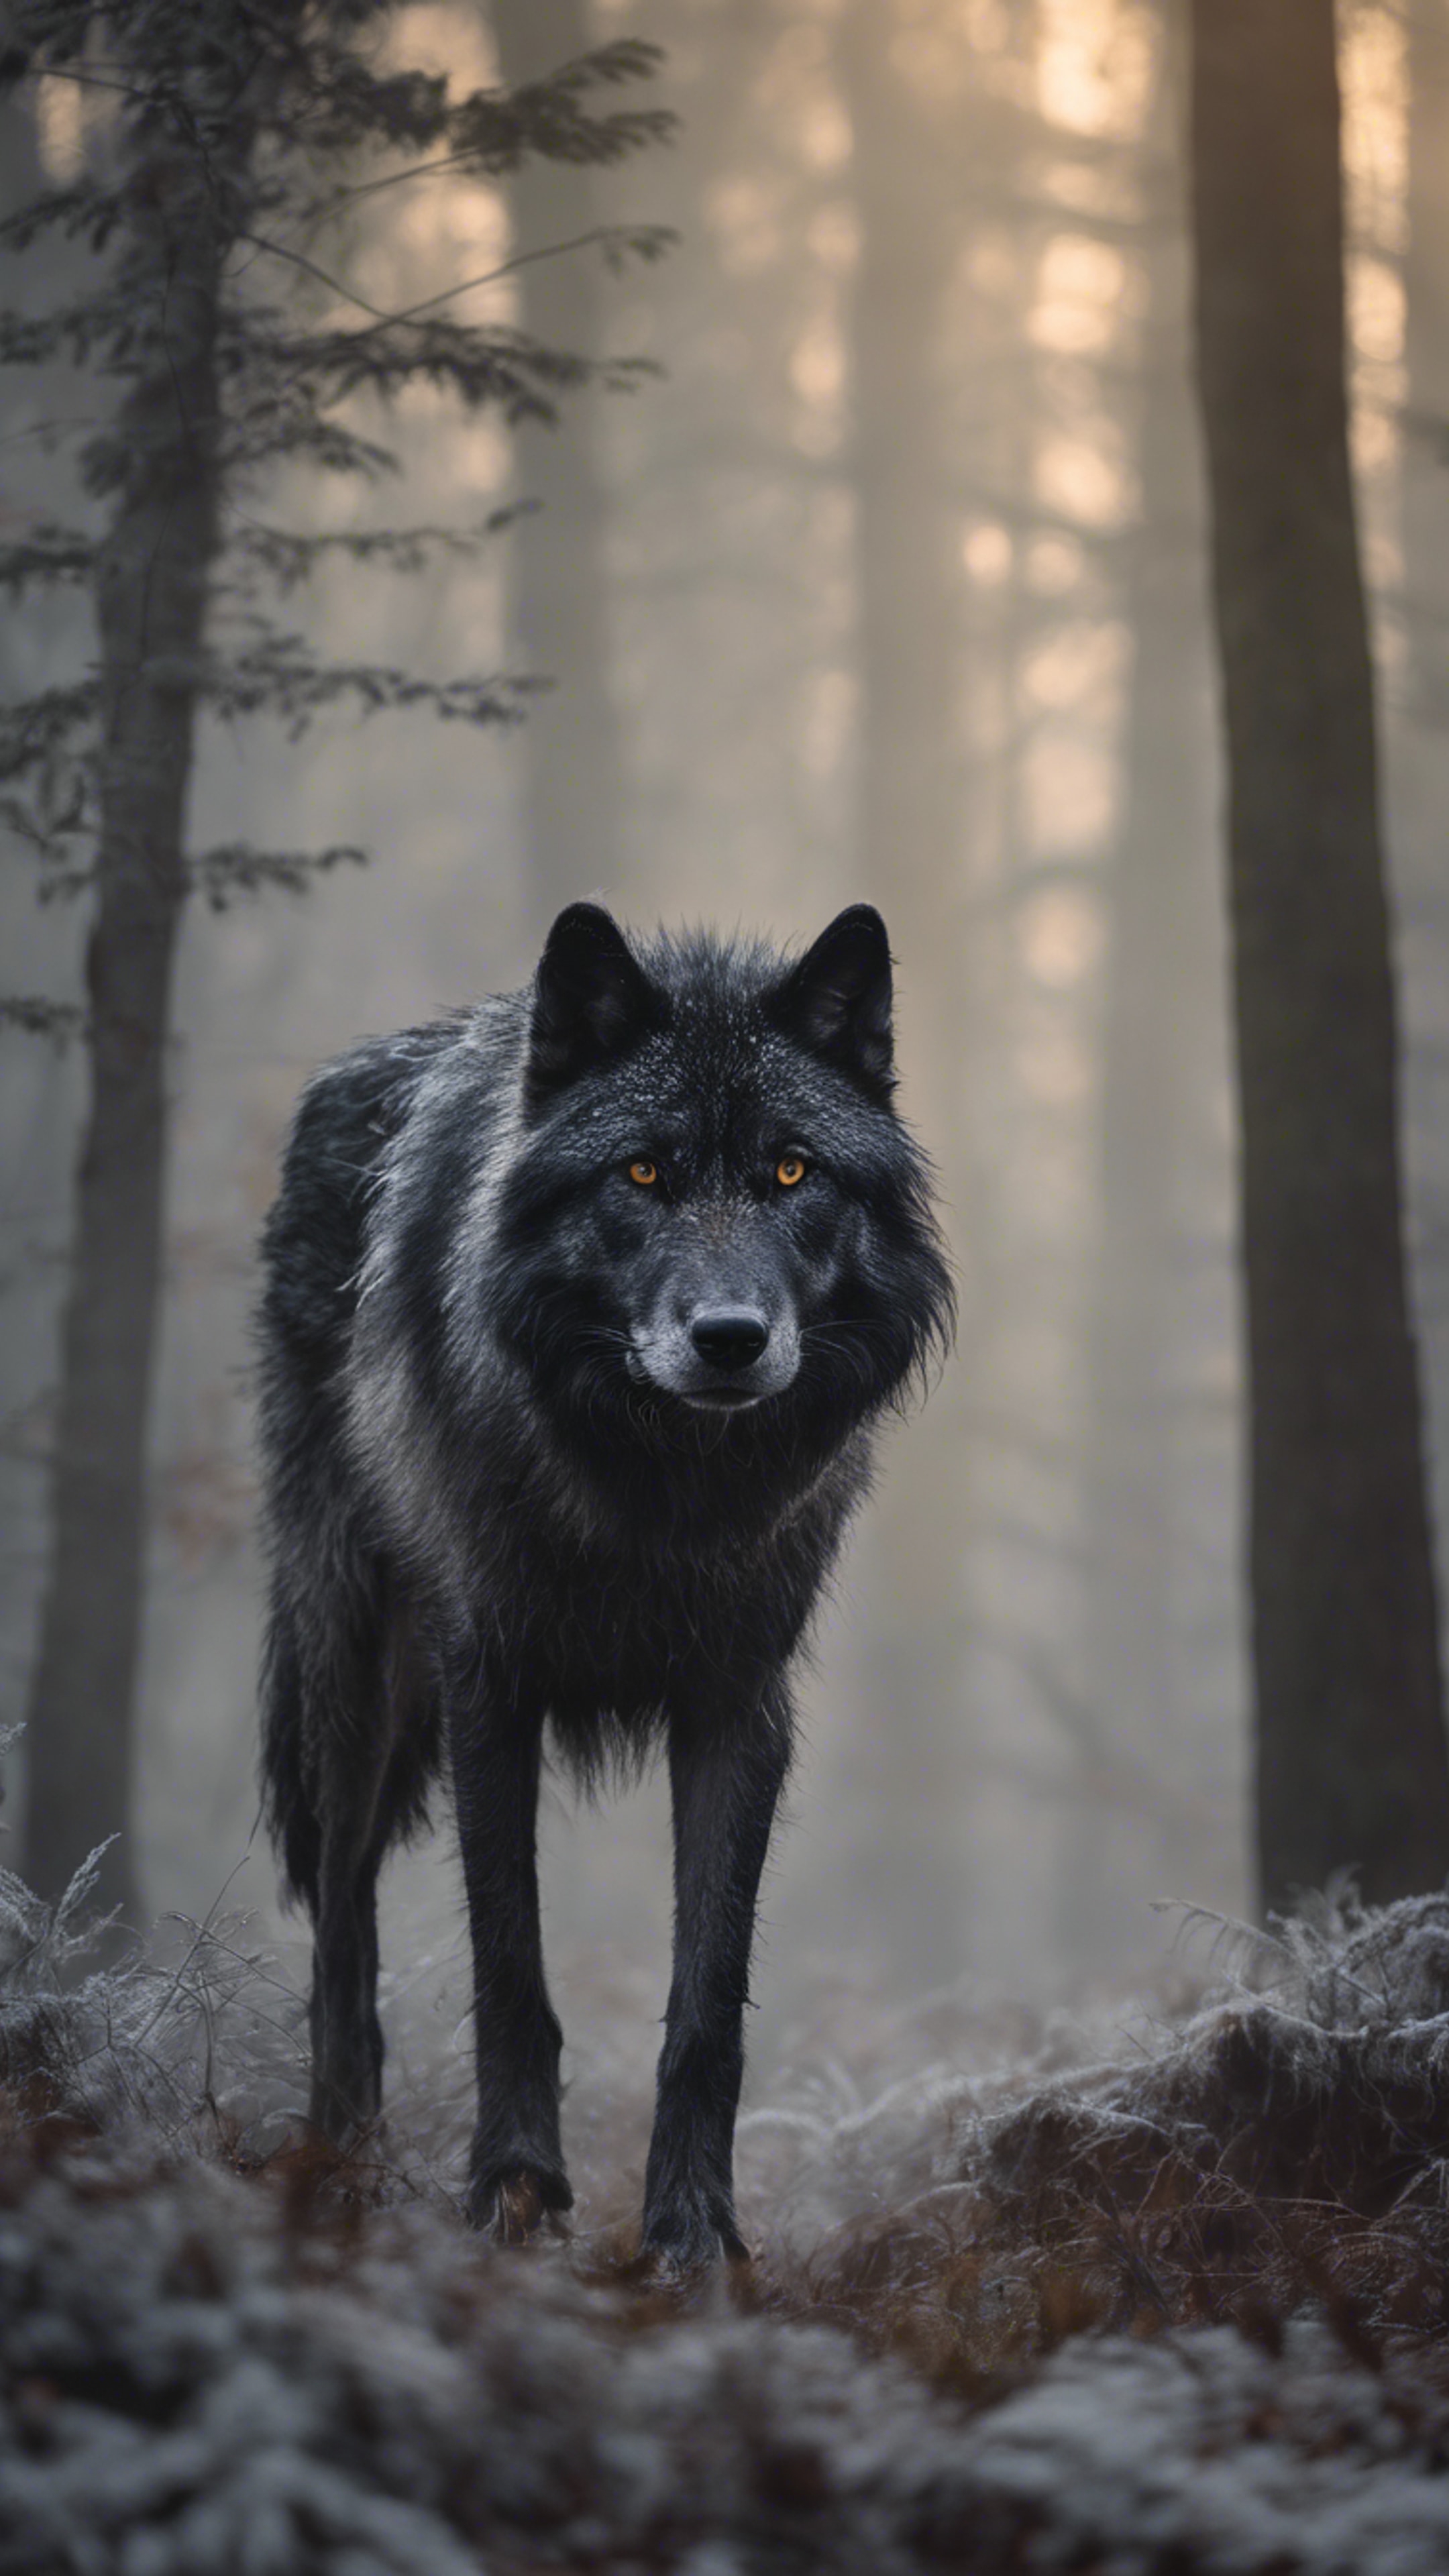 A cool black and gray shaggy wolf prowling through a mist-filled forest at dawn.壁紙[e0adfa1209b347ac9a7e]